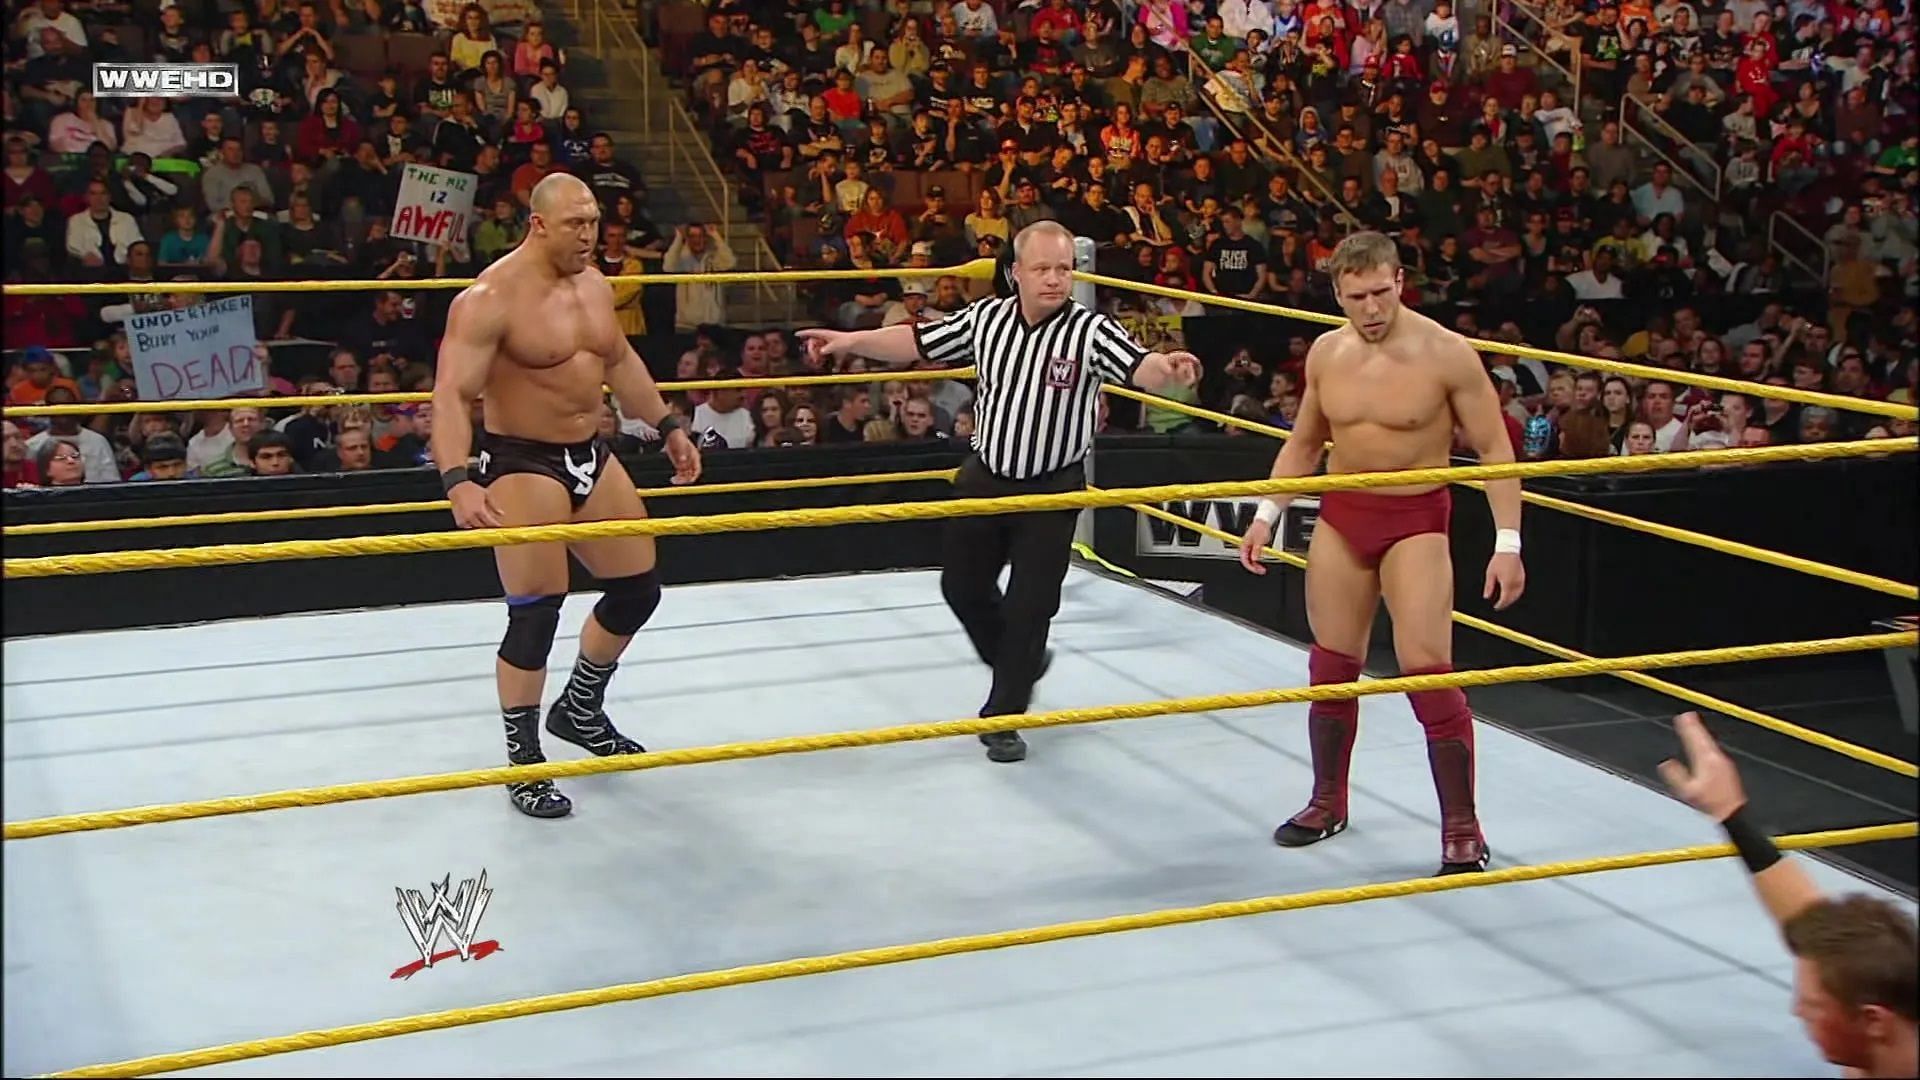 Skip Sheffield and Daniel Bryan on NXT